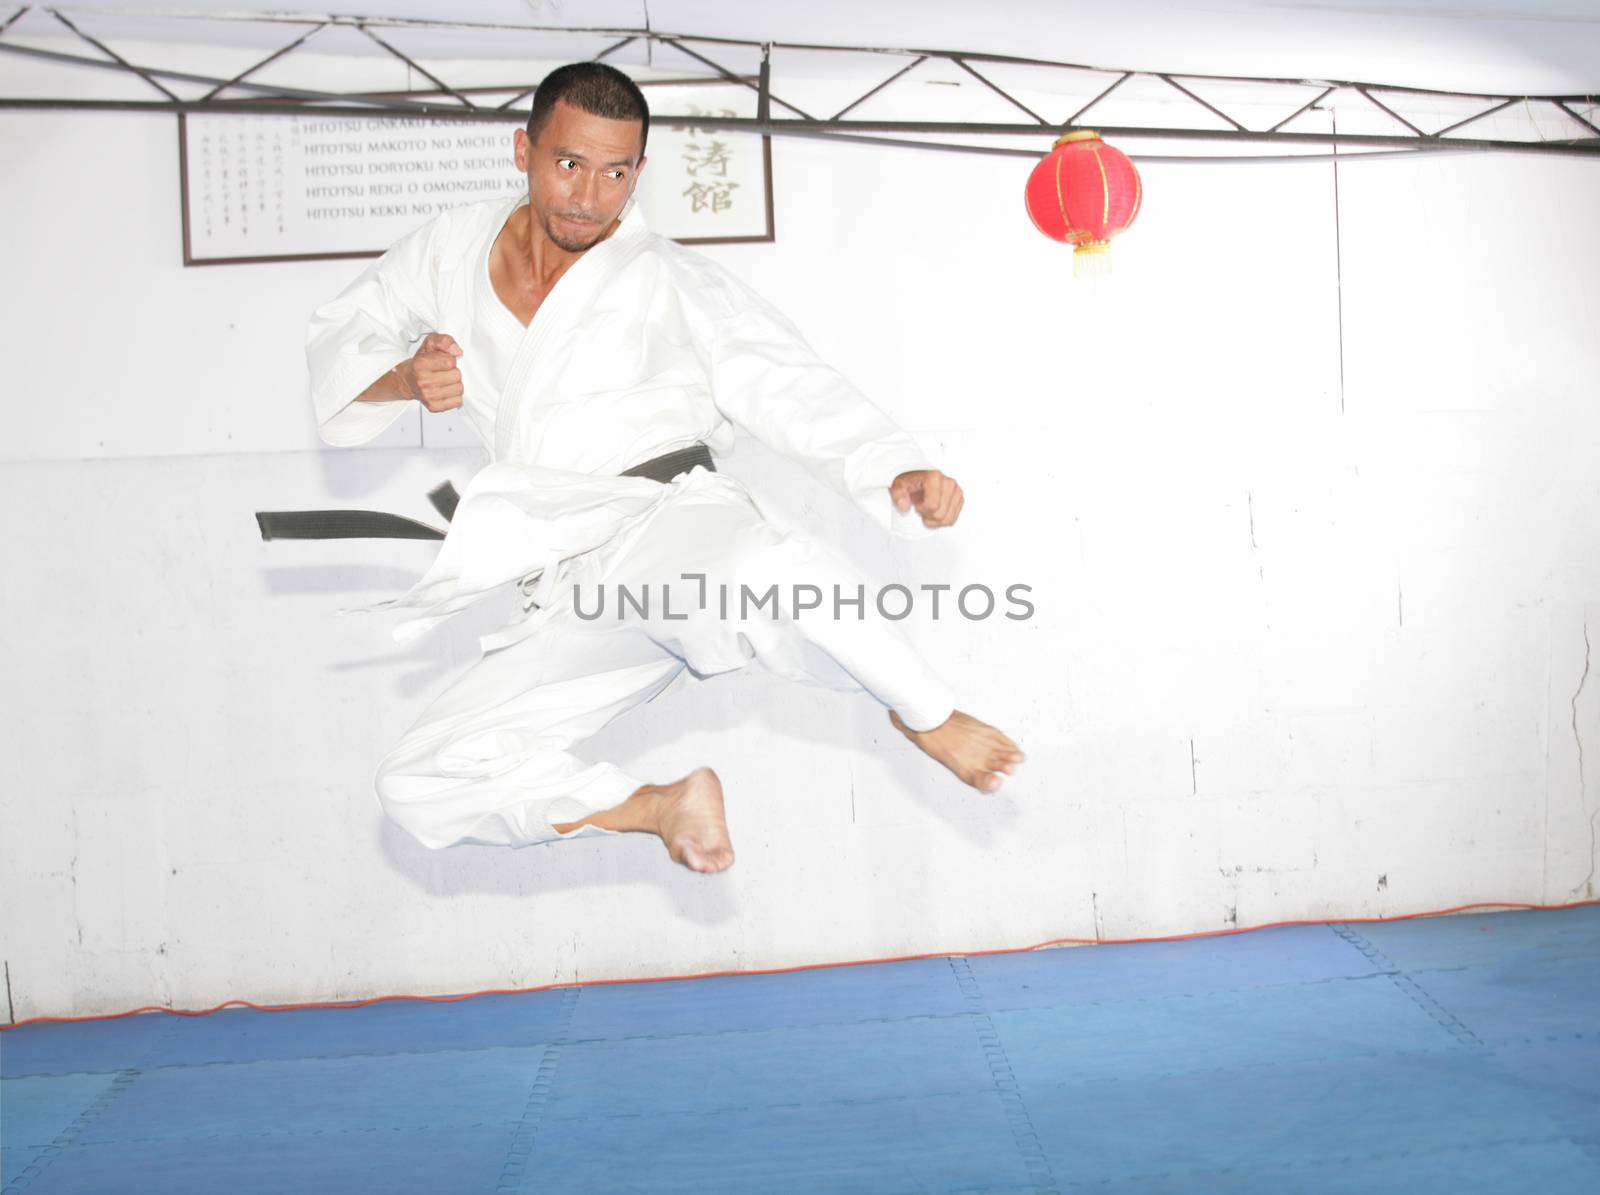 Black belt karate man jumping to give a high kick by dacasdo